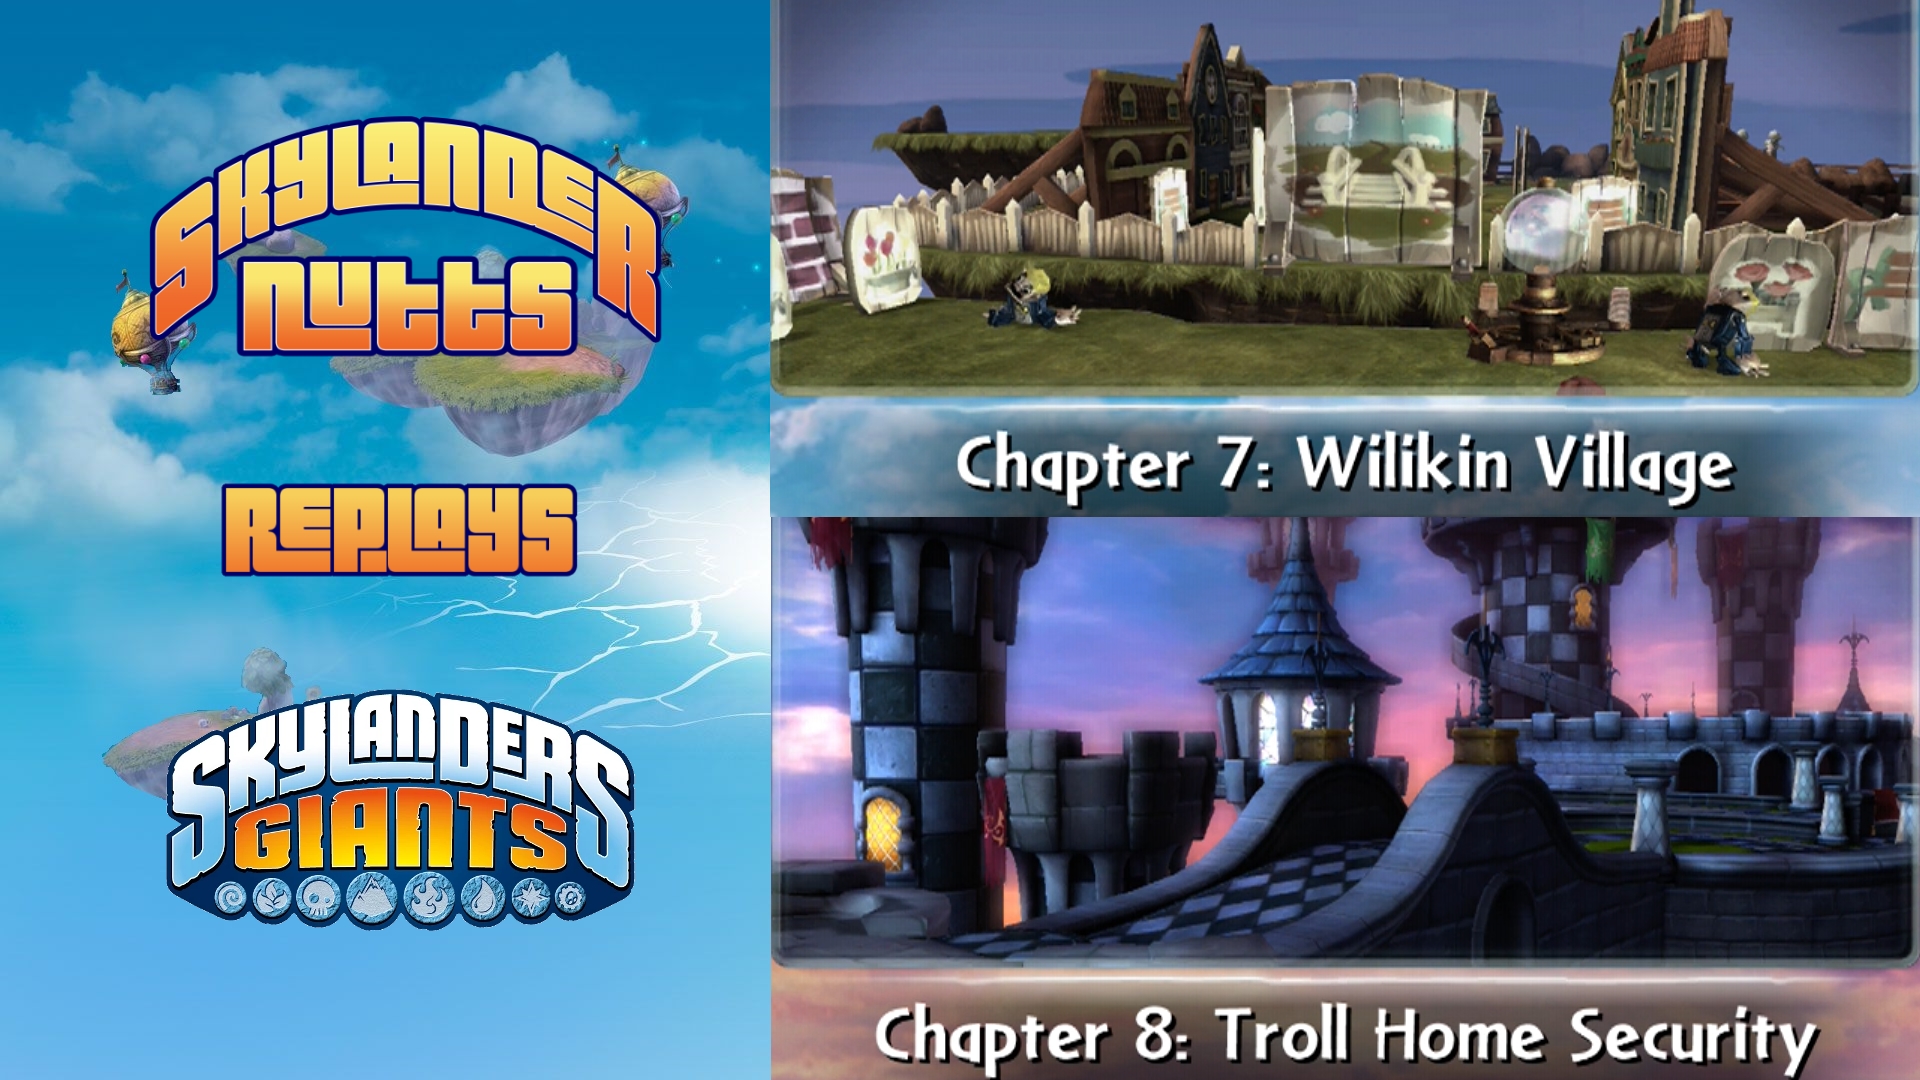 SkylanderNutts Replays Giants (Ch 7 - Wiliken Village and Ch 8 - Troll Home Security)